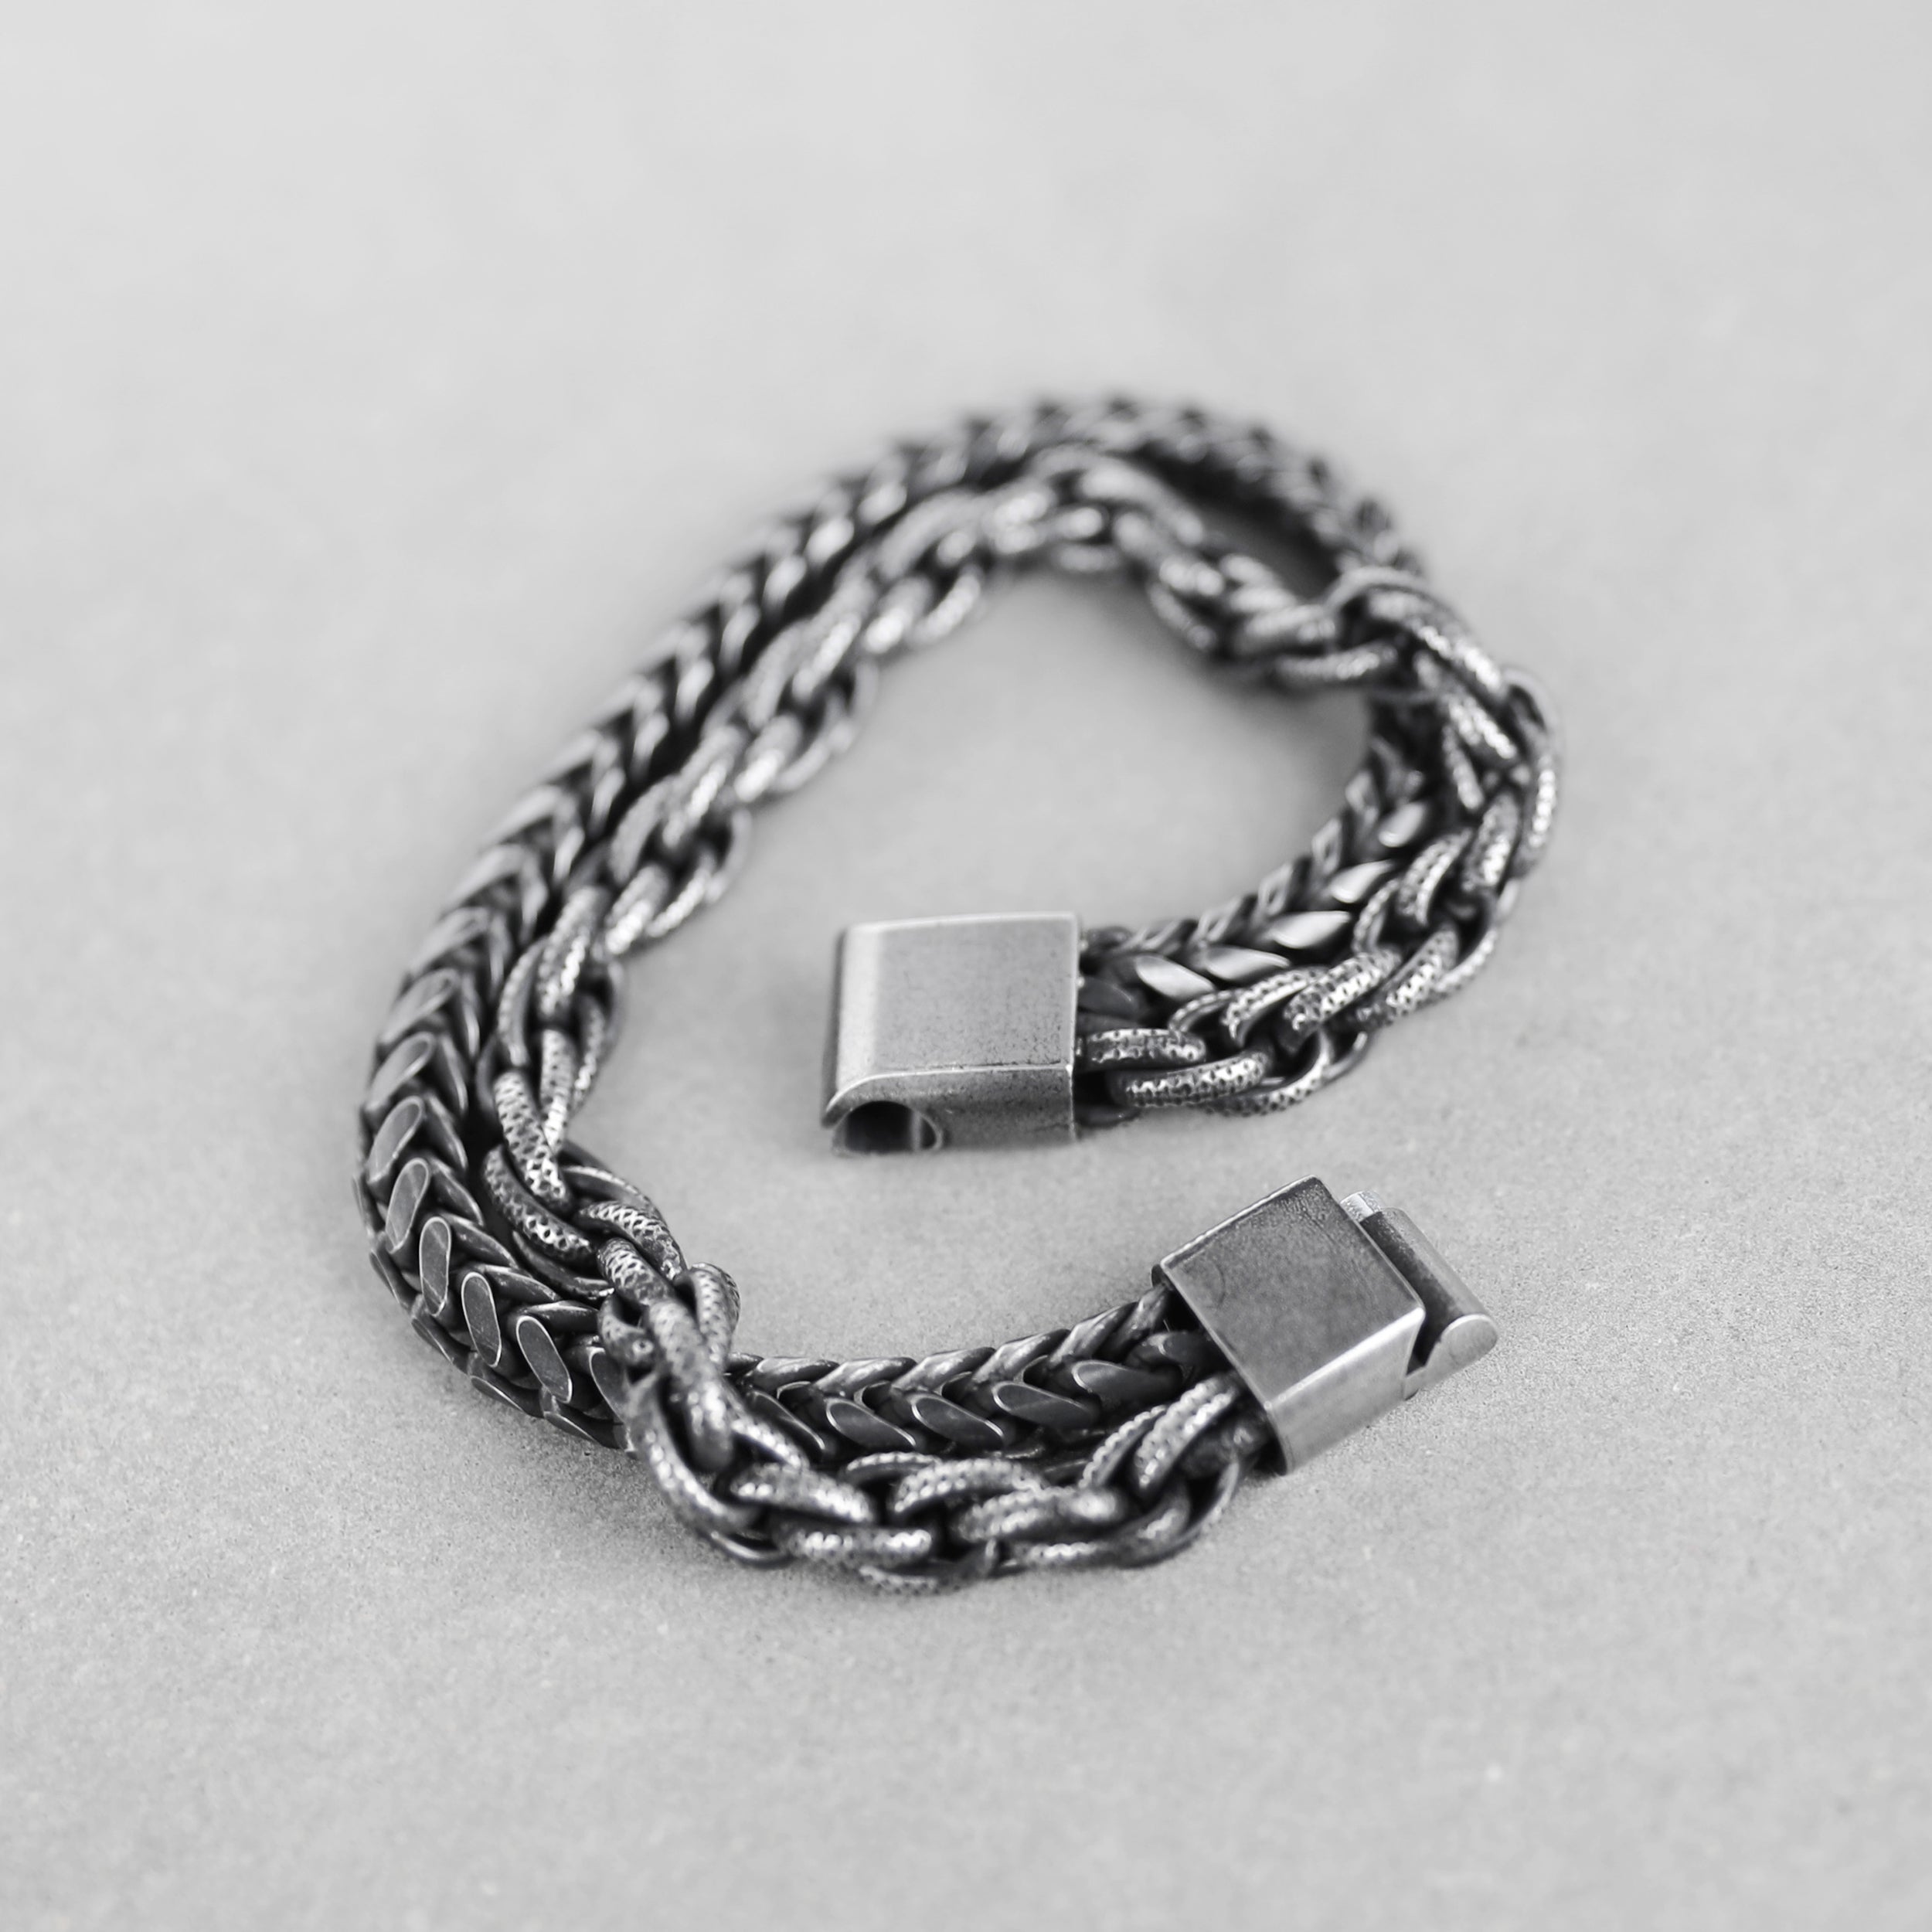 Franco Oval Link Chain Bracelet - Aged Silver 14mm